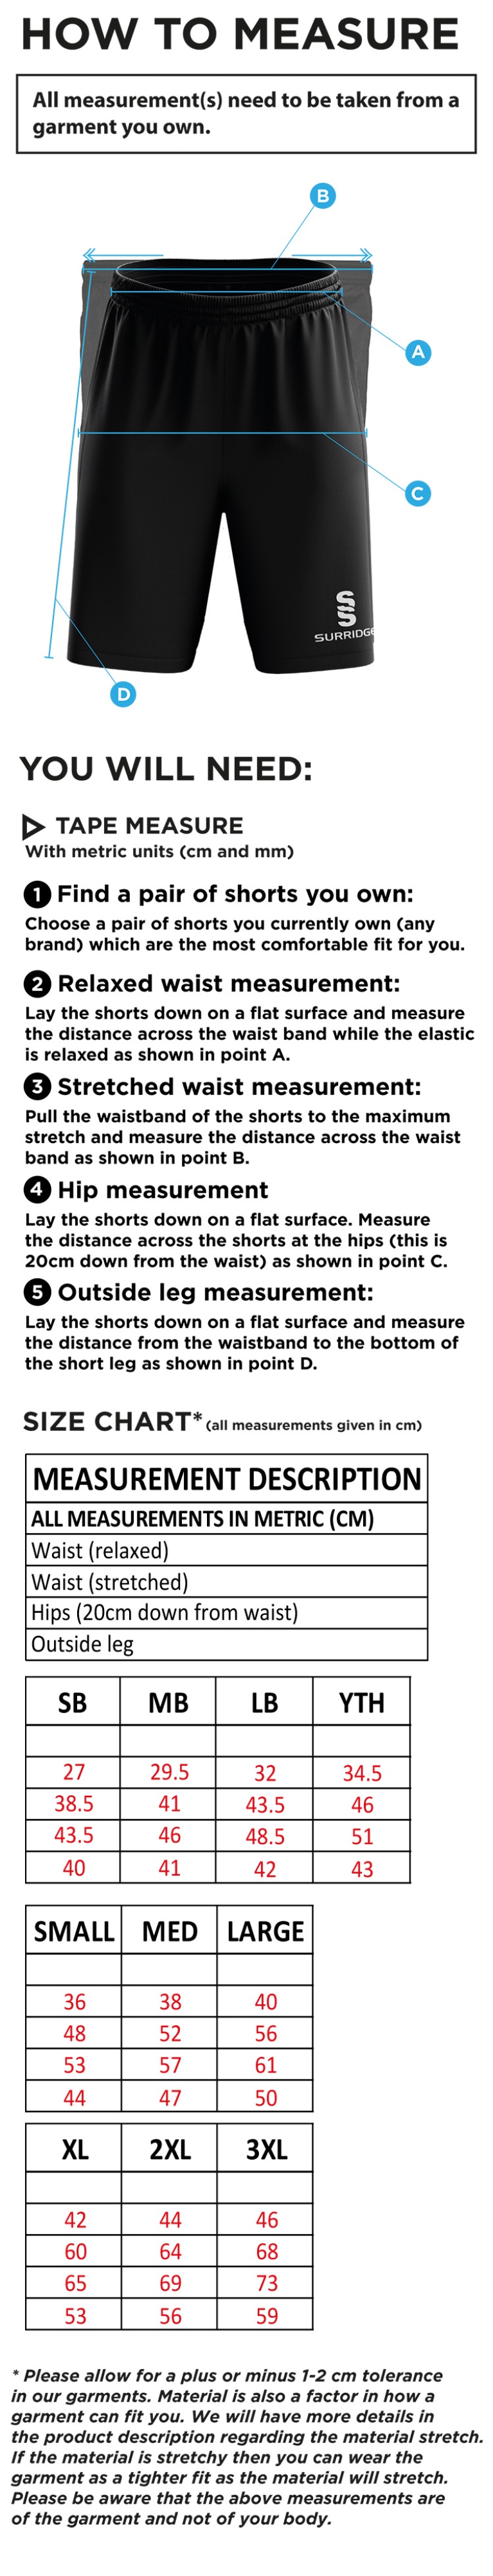 Great Bedwyn CC - Blade Shorts - Size Guide